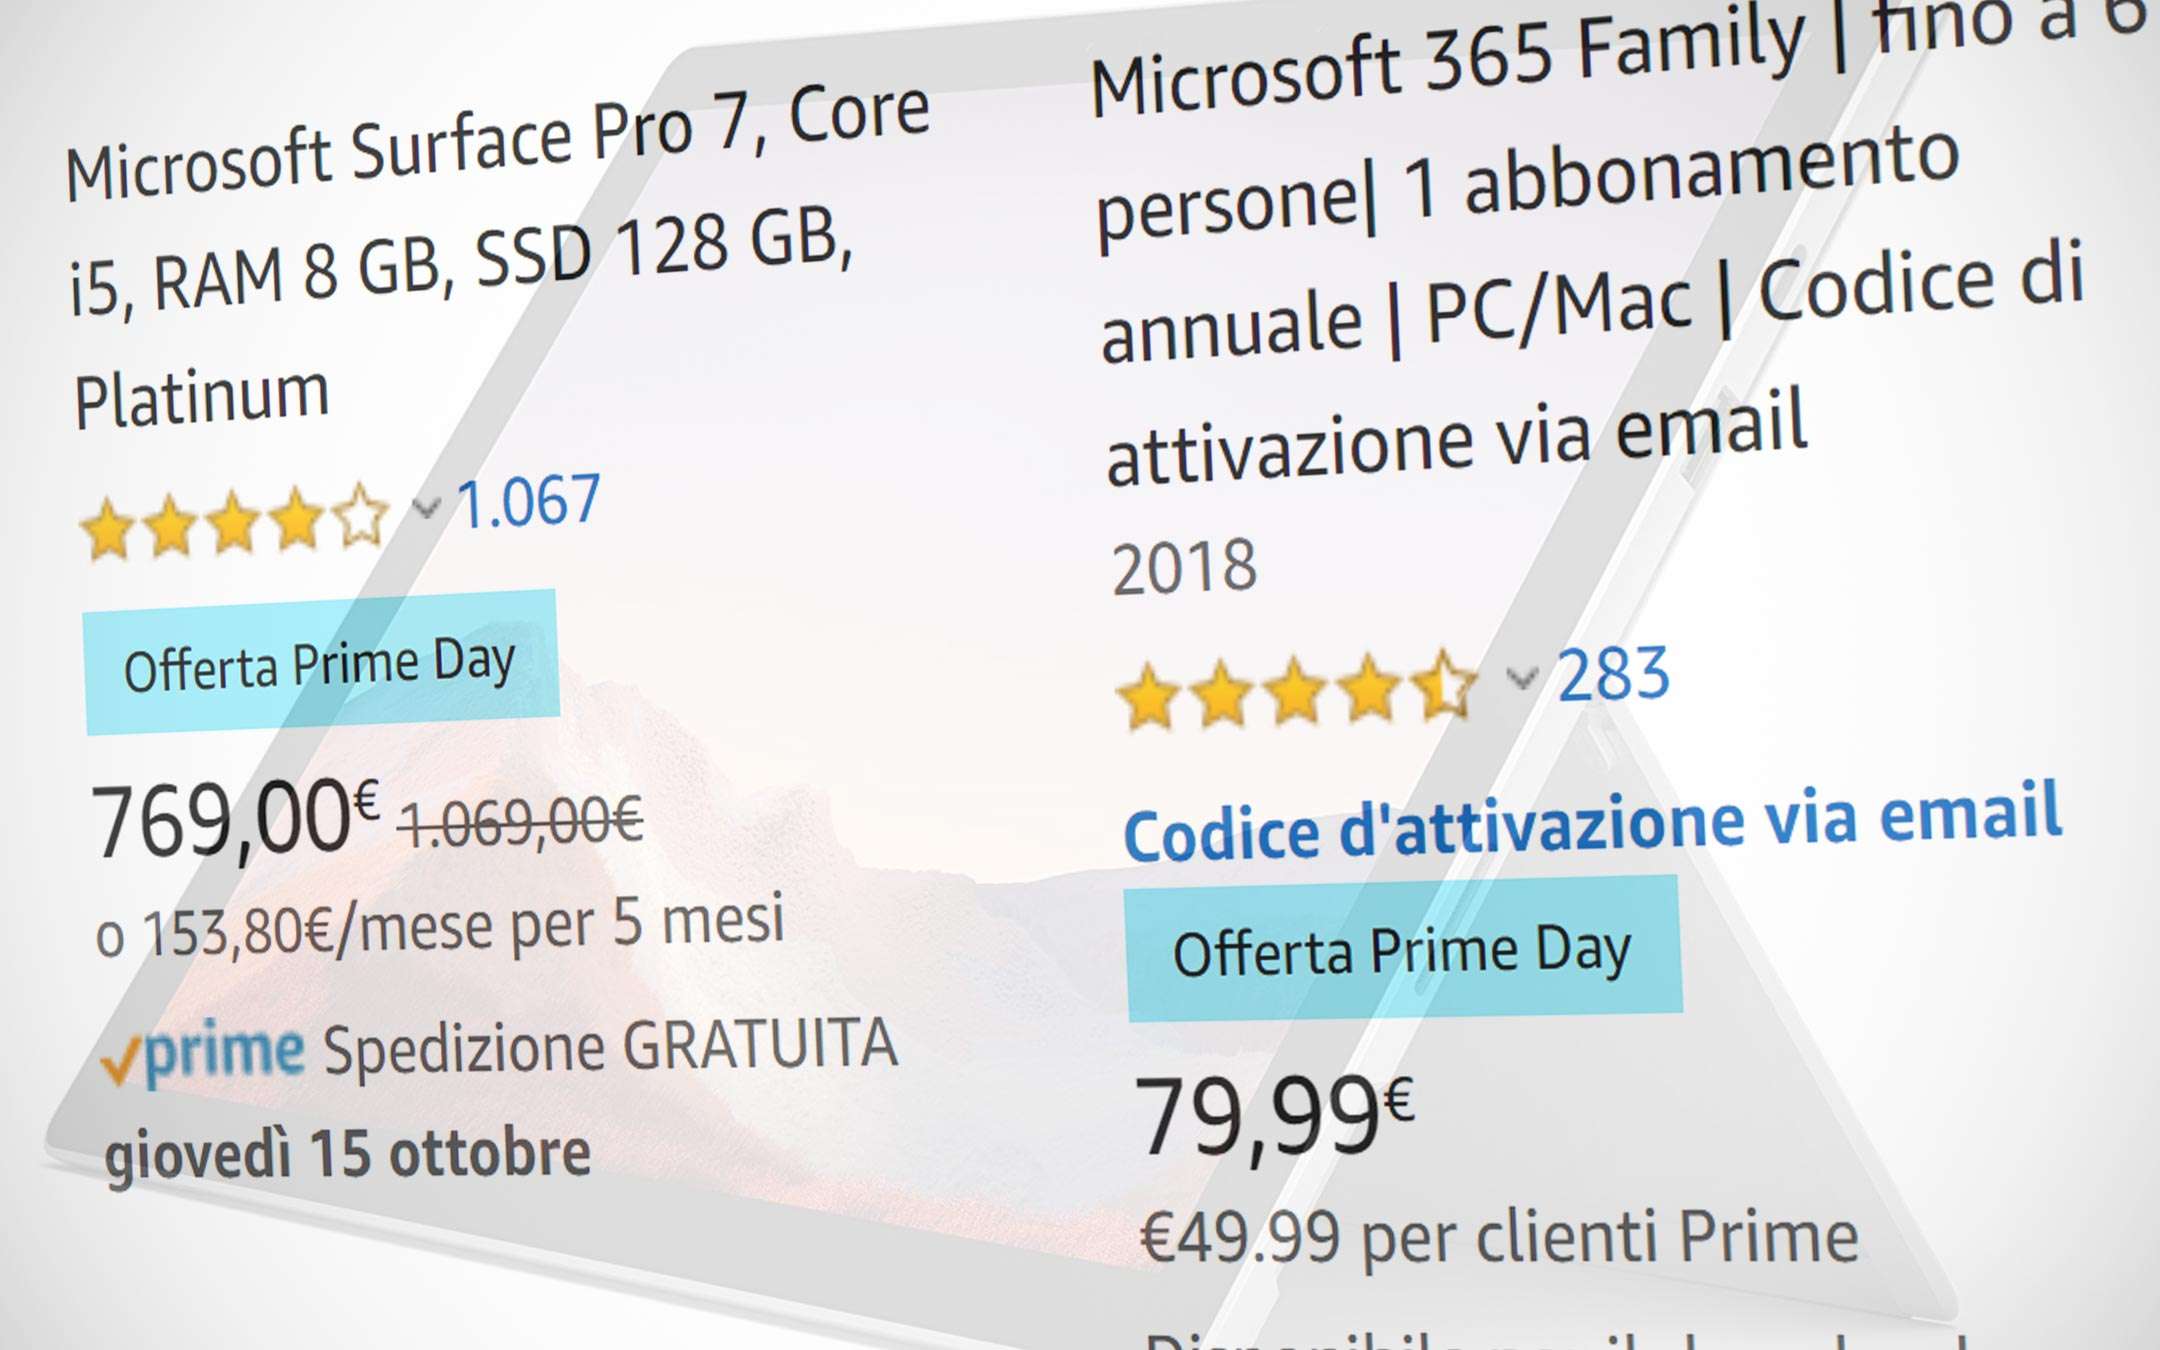 Microsoft's Prime Day Deals